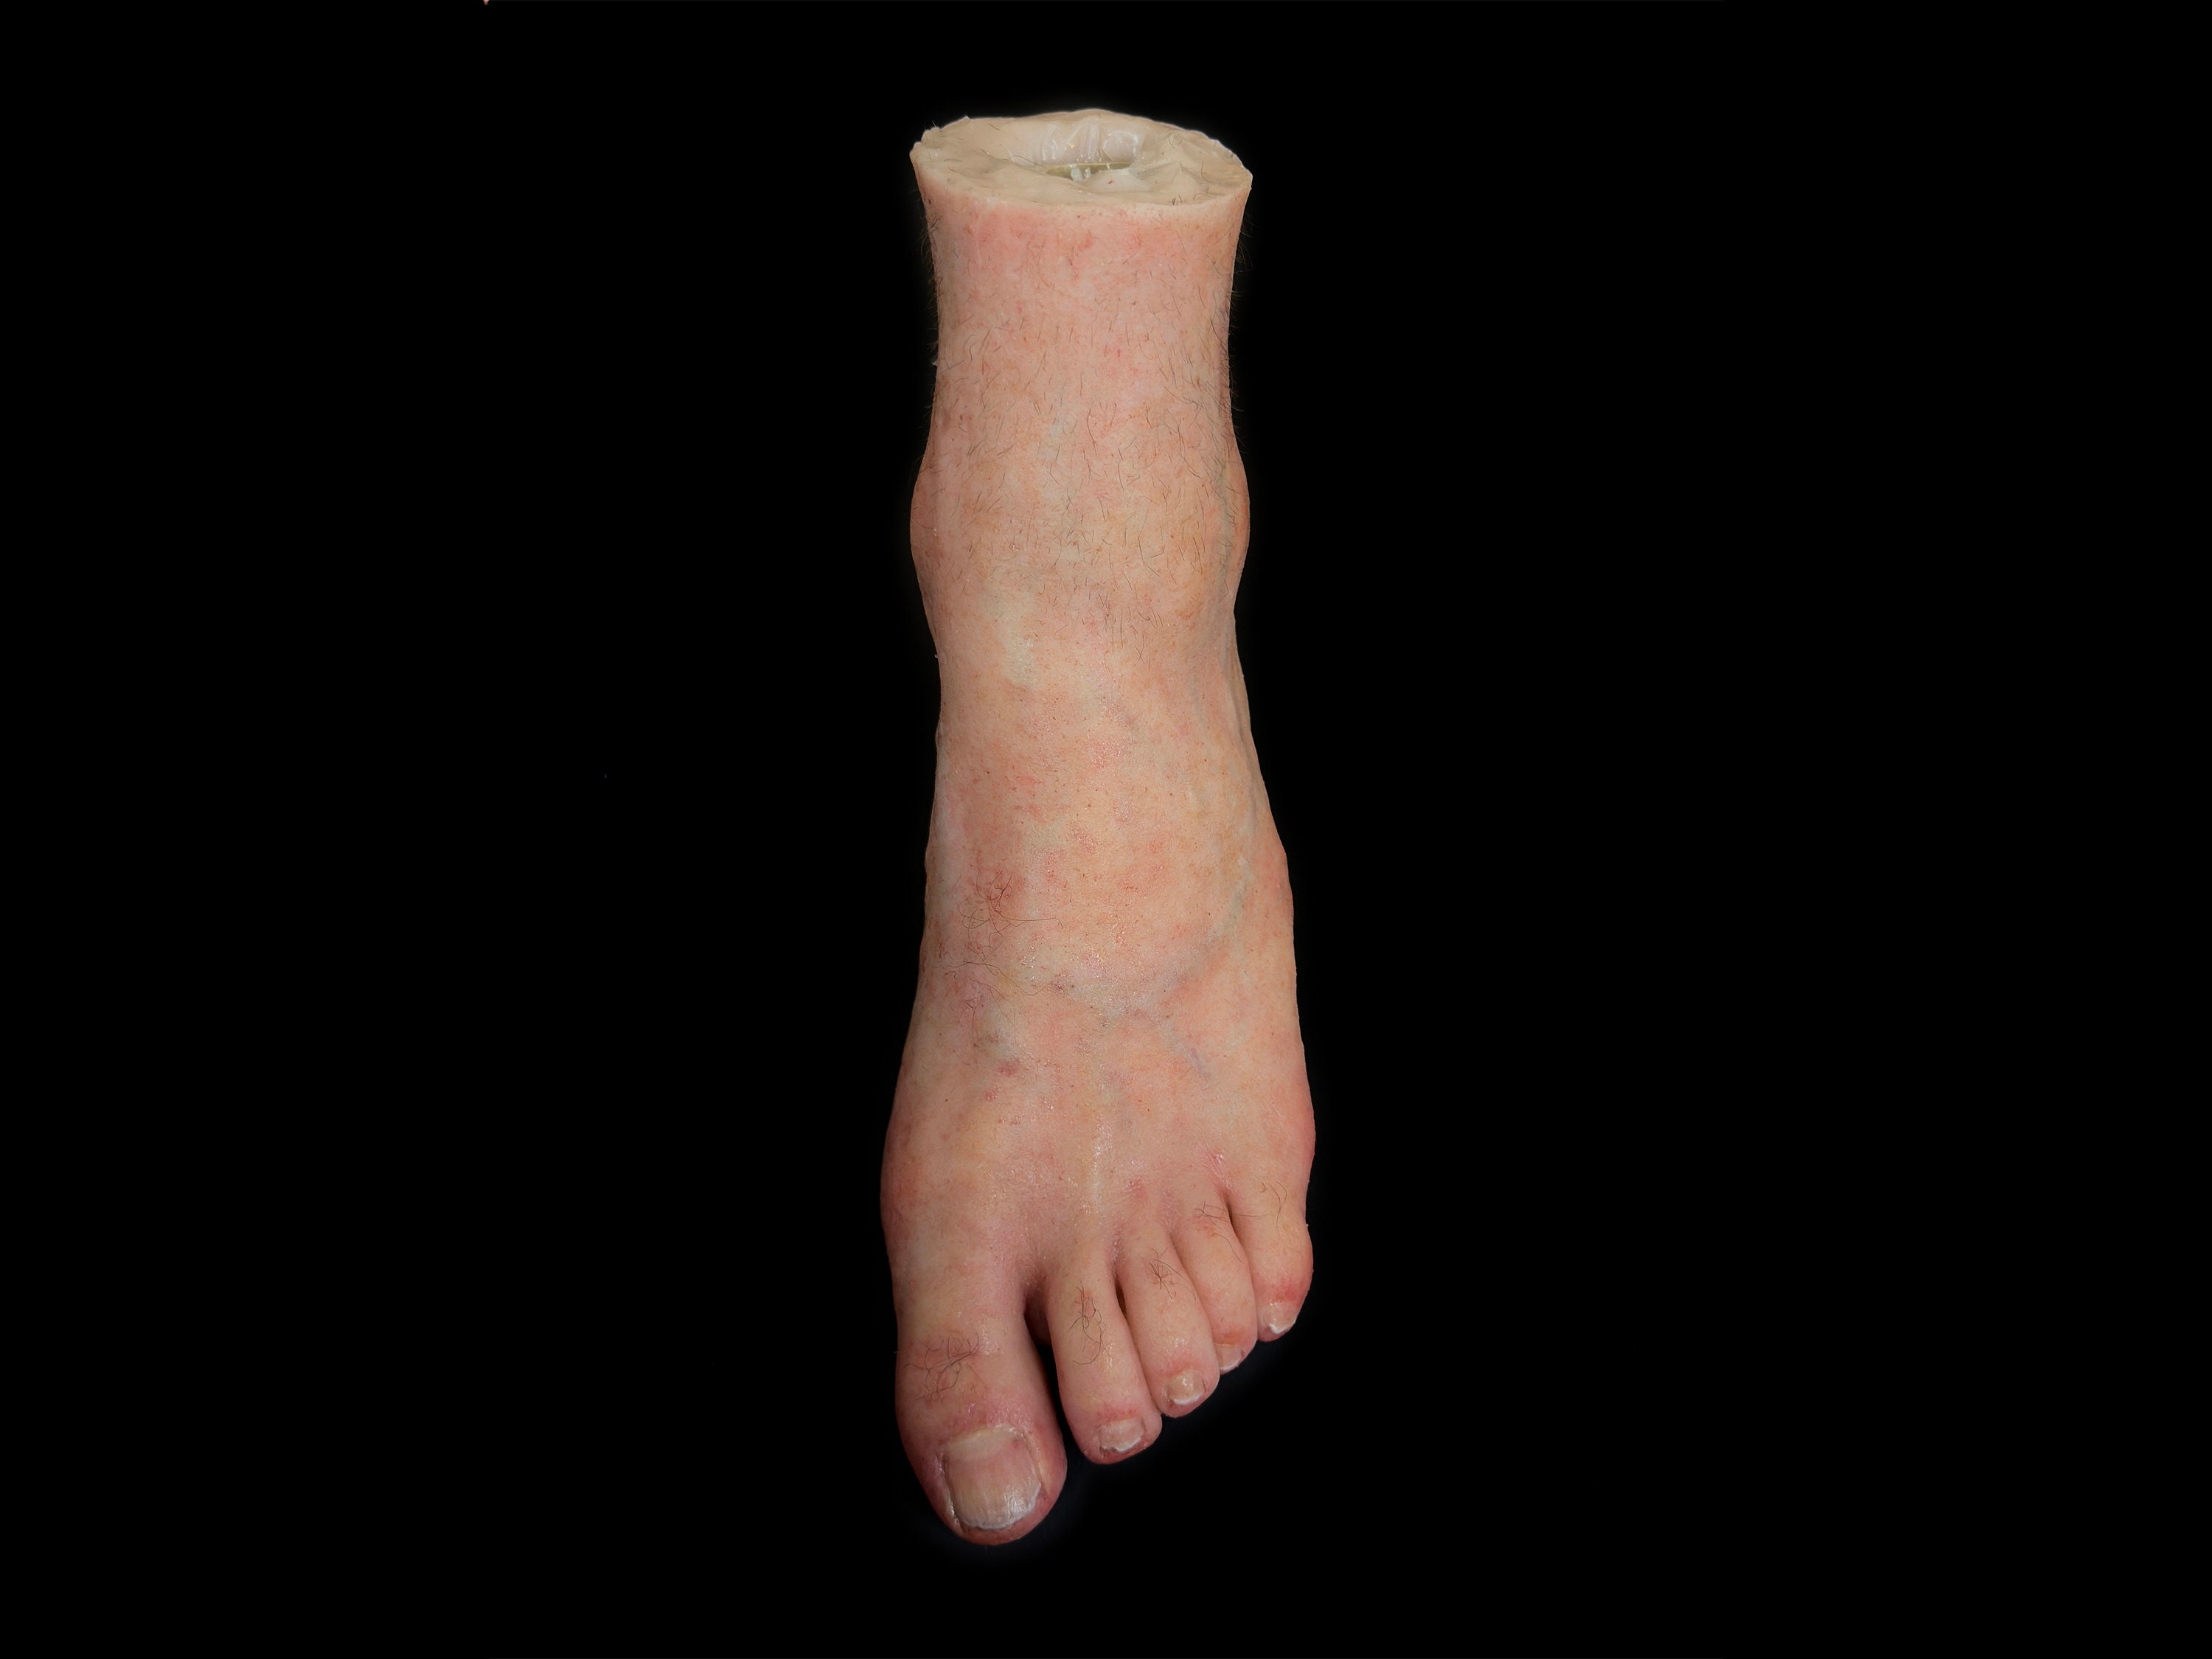 Realistic Silicone Female Left Foot 